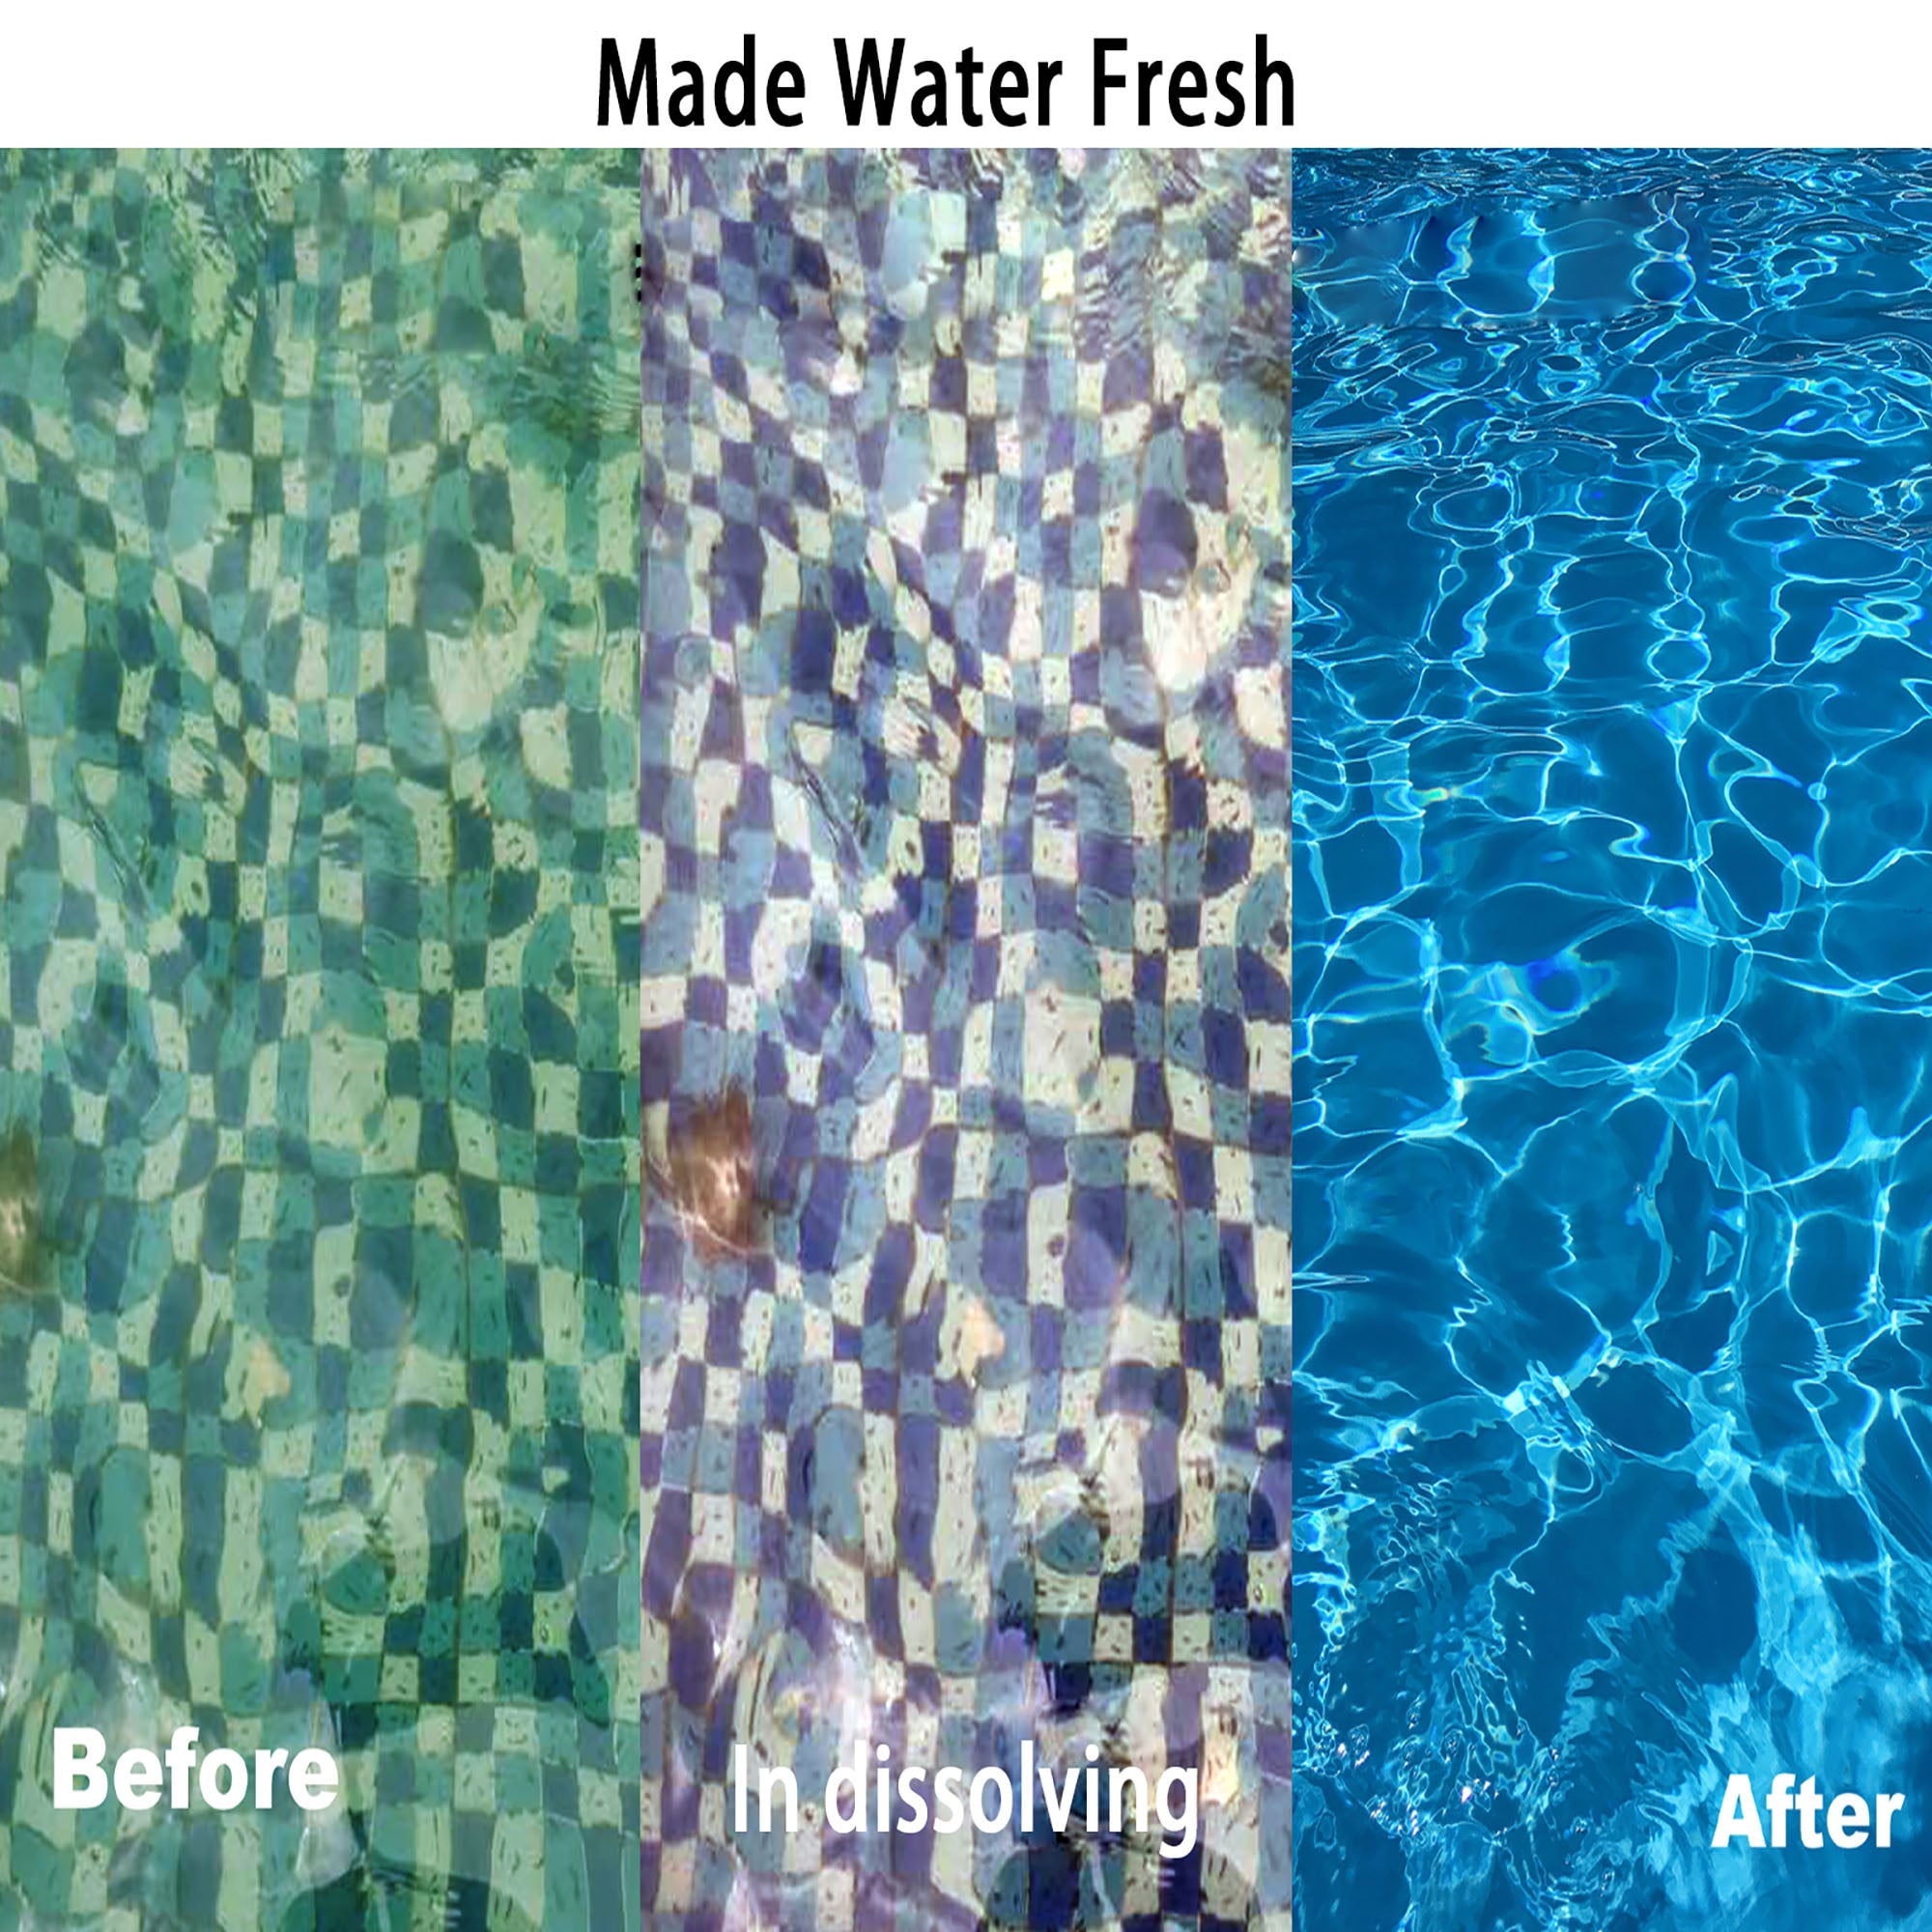 Make Water Fresh